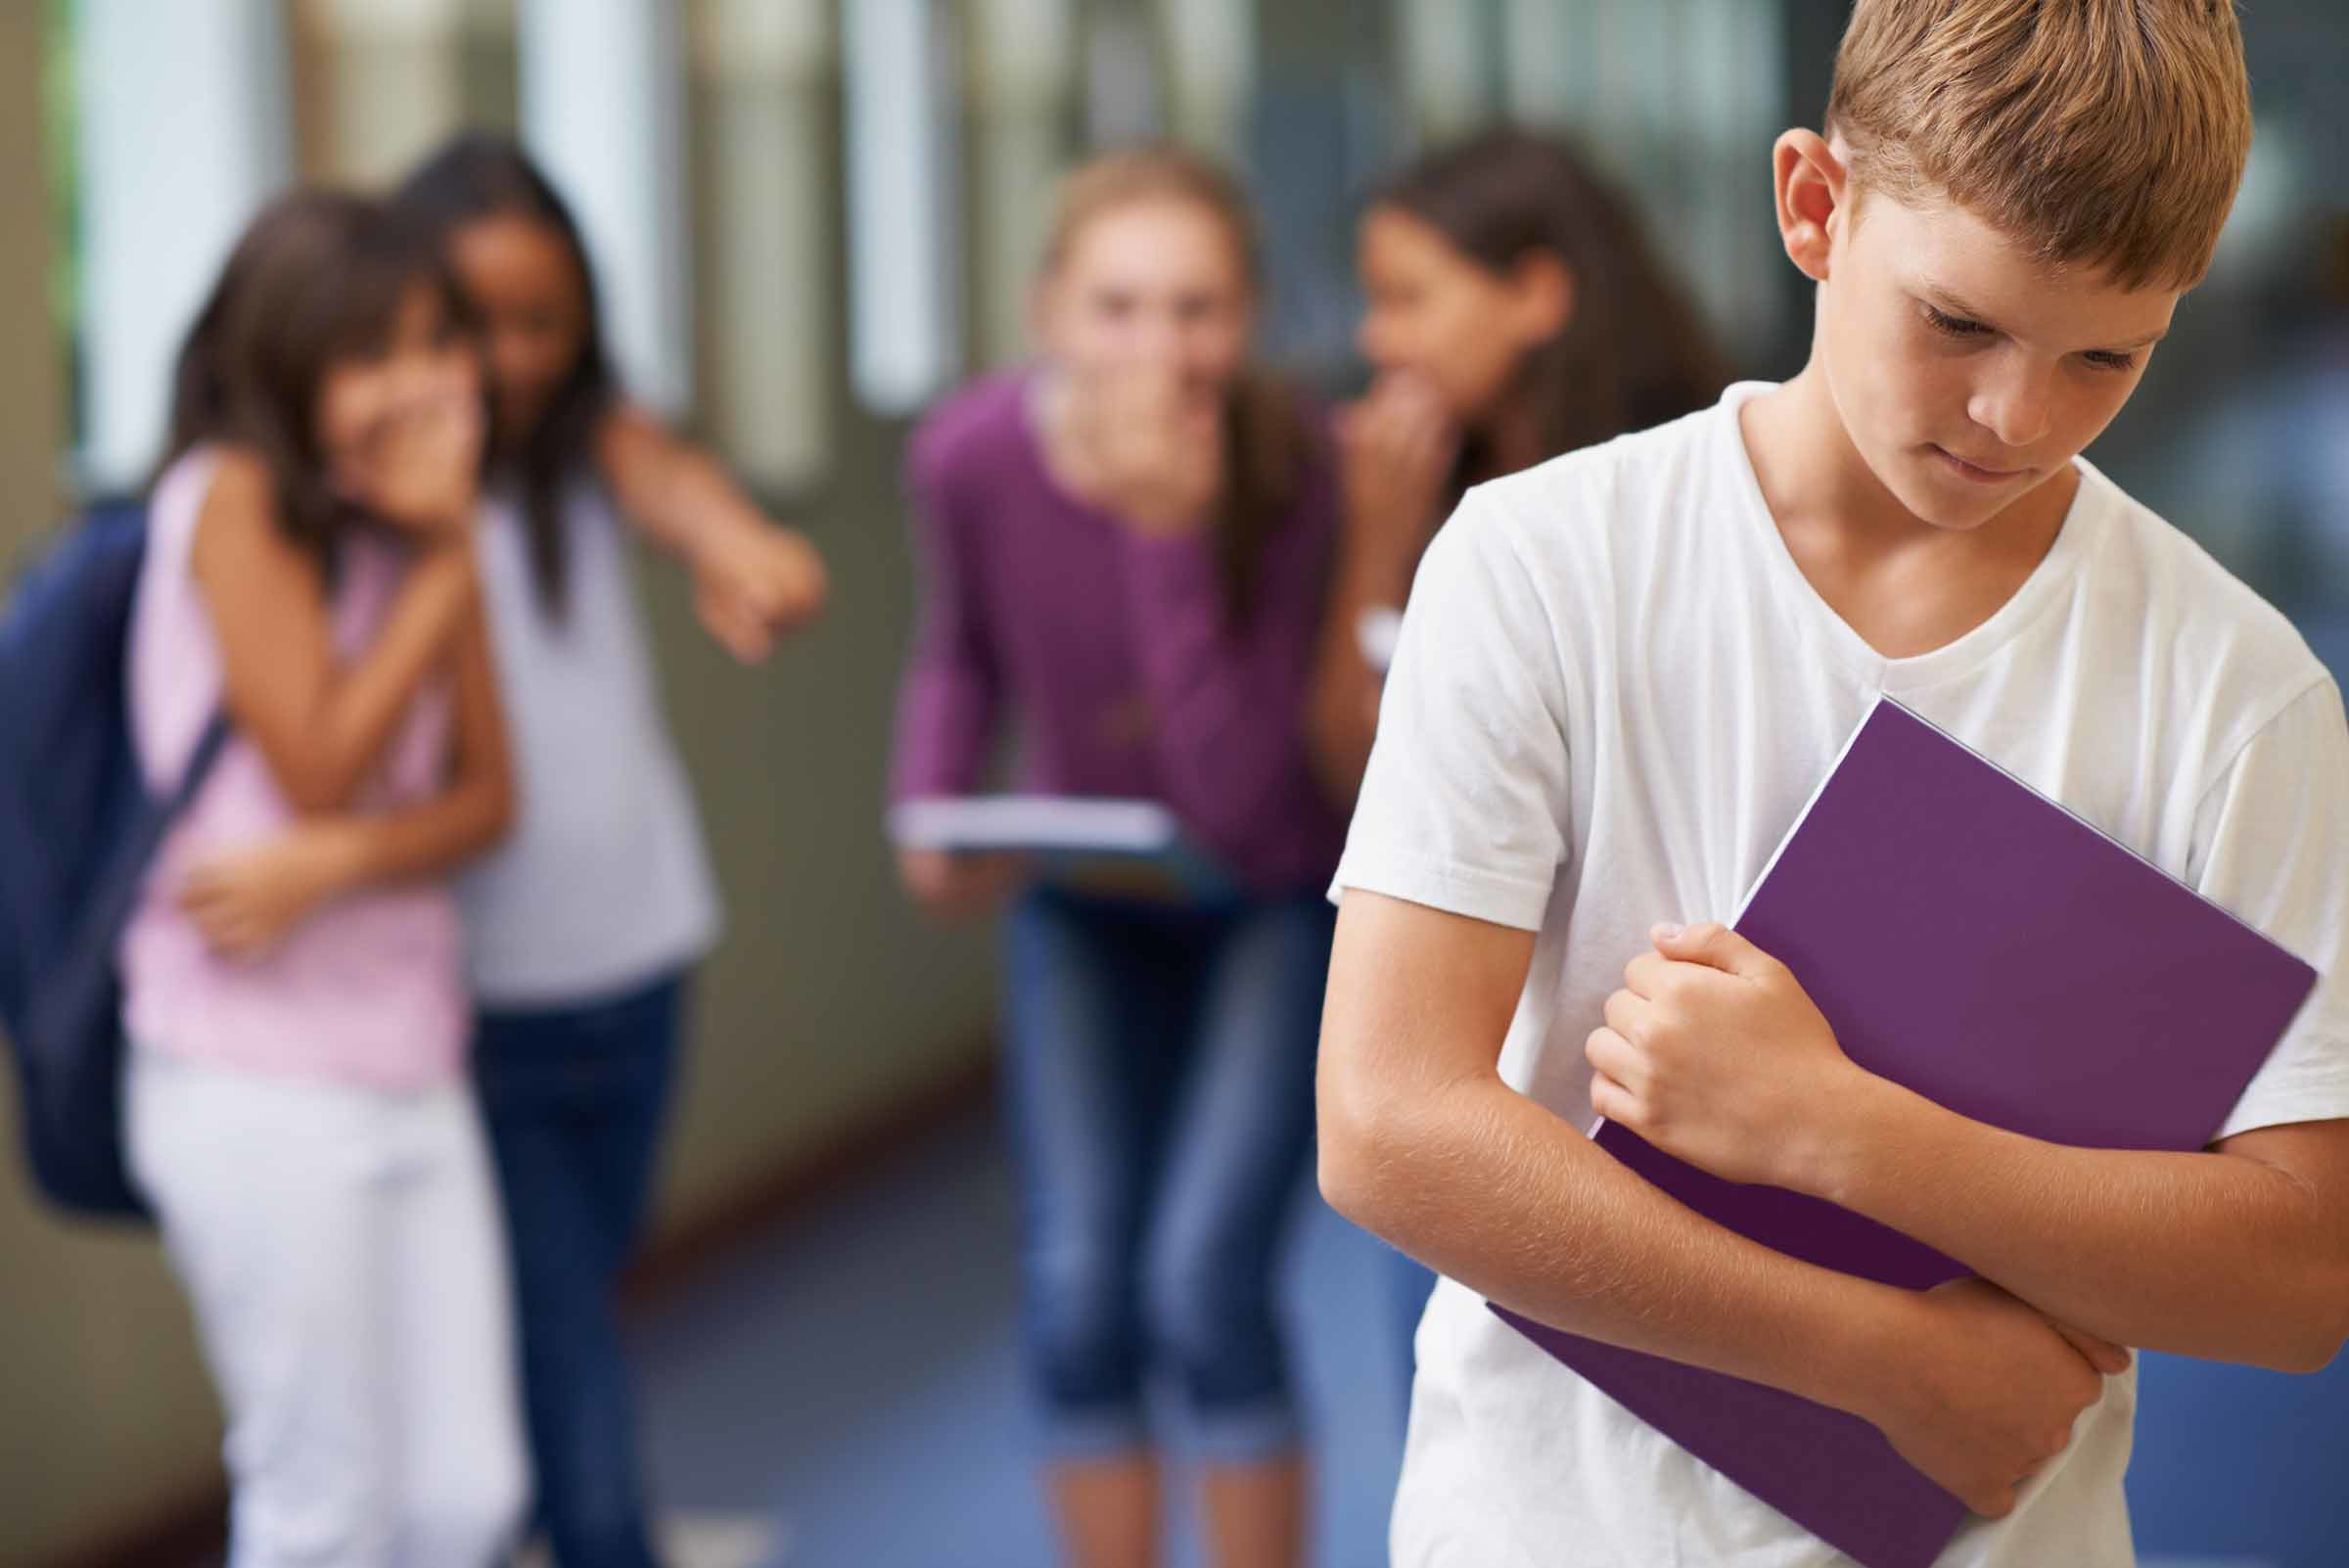 kids being bullied at school - getting help from bullies - northland child psychiatry - kansas city psychiatry